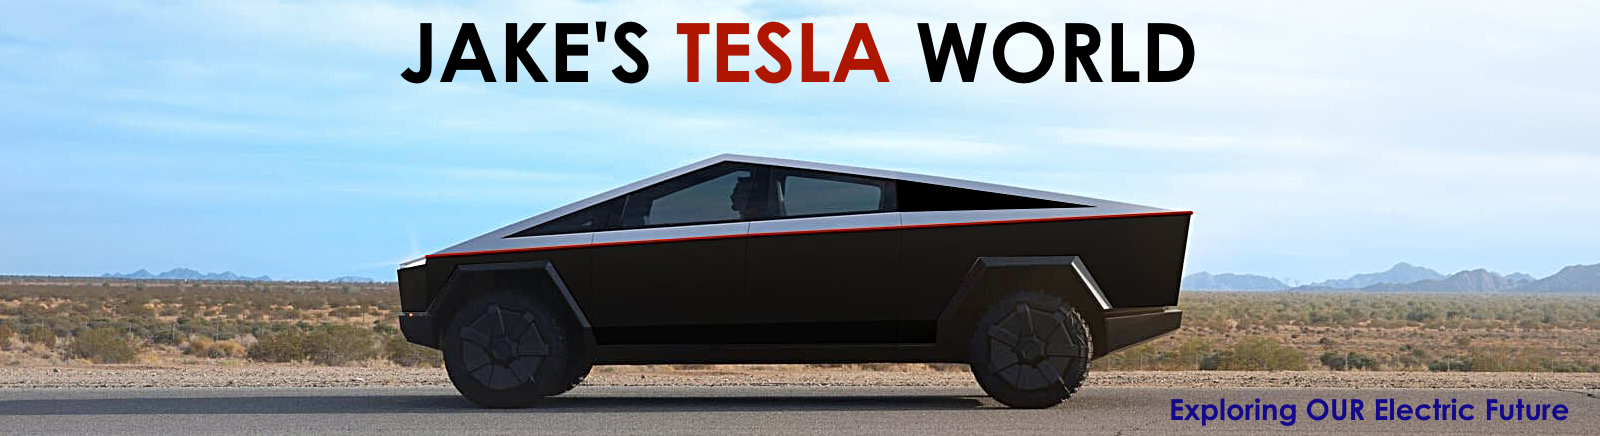 Welcome to TeslaMagazine.org...Home of Jake's Tesla World